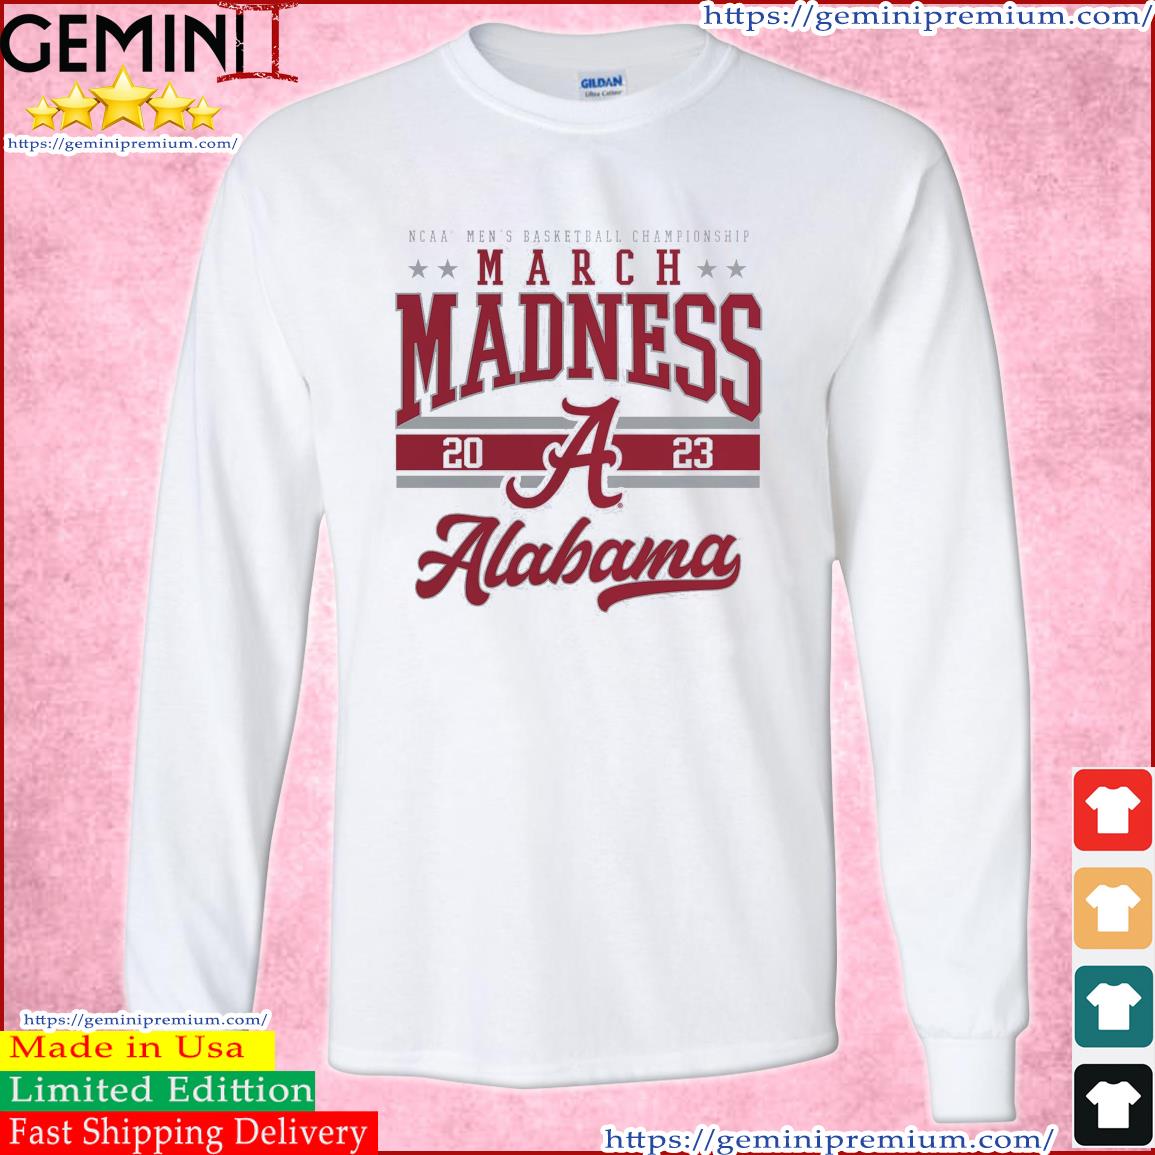 Alabama Crimson Tide NCAA Men's Basketball Tournament March Madness 2023 Shirt Long Sleeve Tee